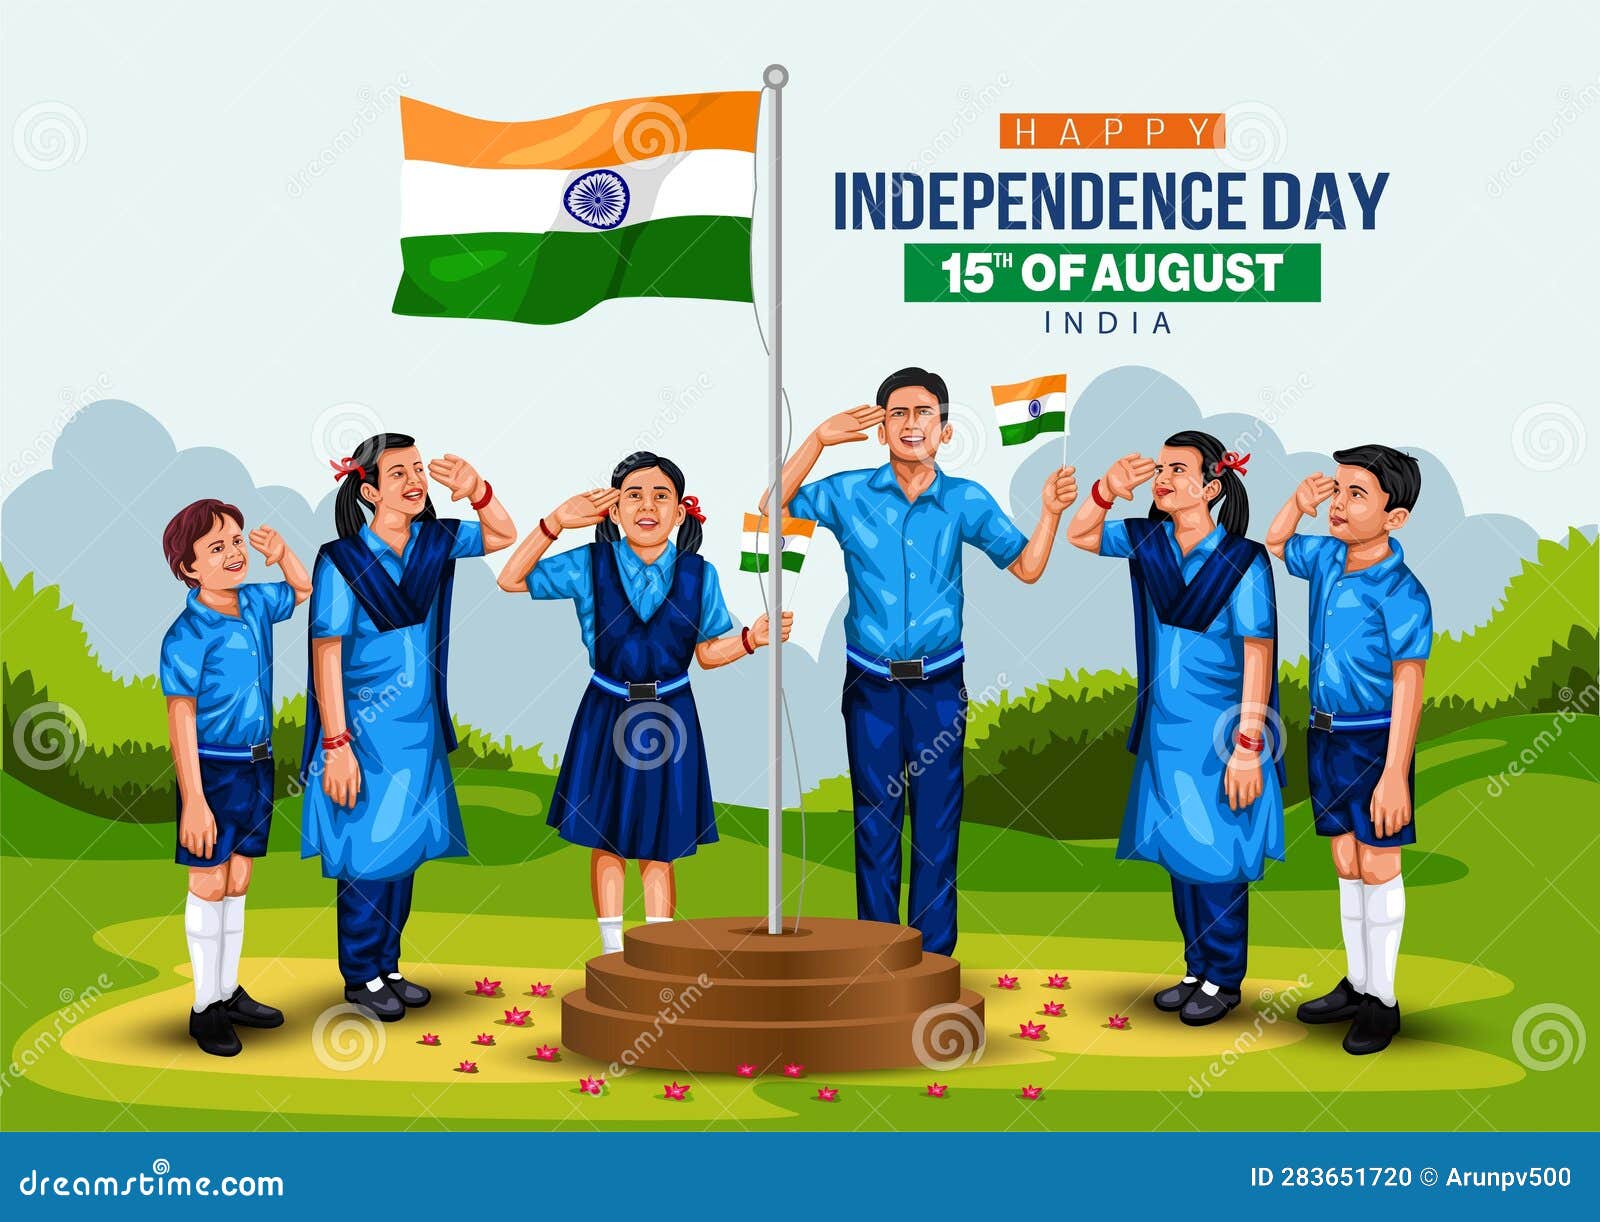 IndiansinKuwait.com - Happy Independence Day-saigonsouth.com.vn